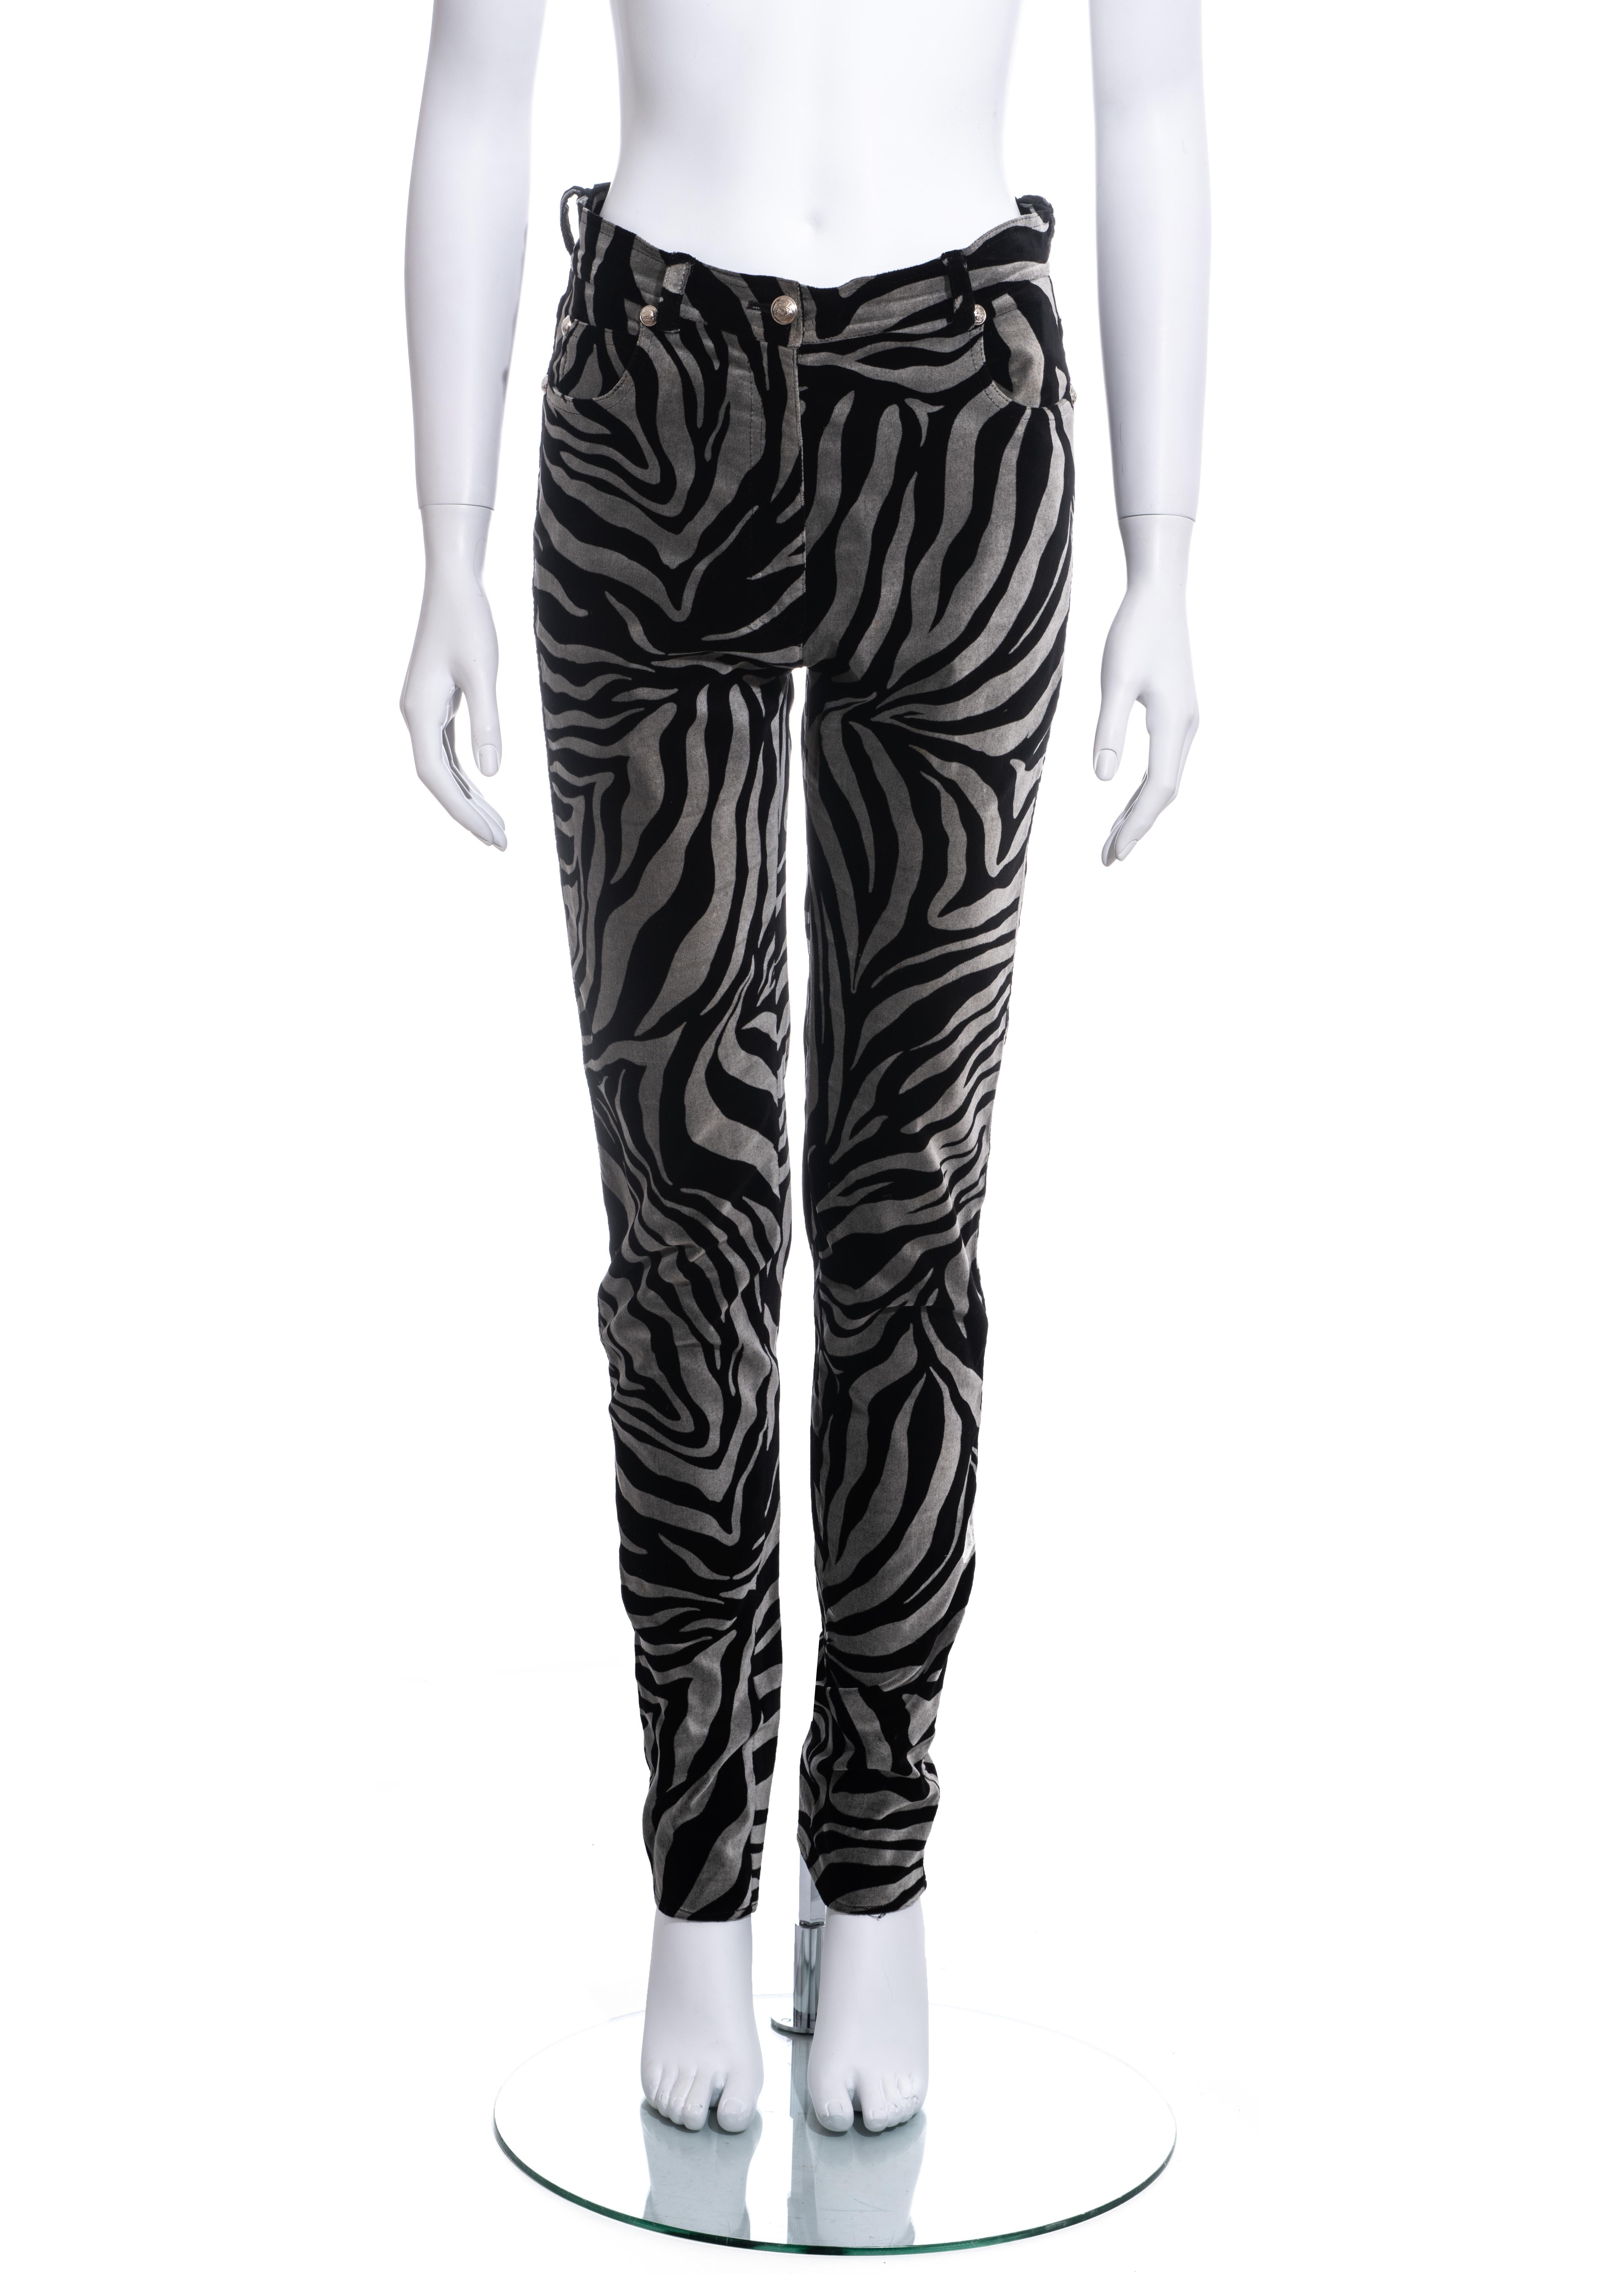 ▪ Gianni Versace black and grey zebra print pants
▪ Straight leg 
▪ IT 44 - FR 40 - UK 12 - US 8
▪ Spring-Summer 1992 